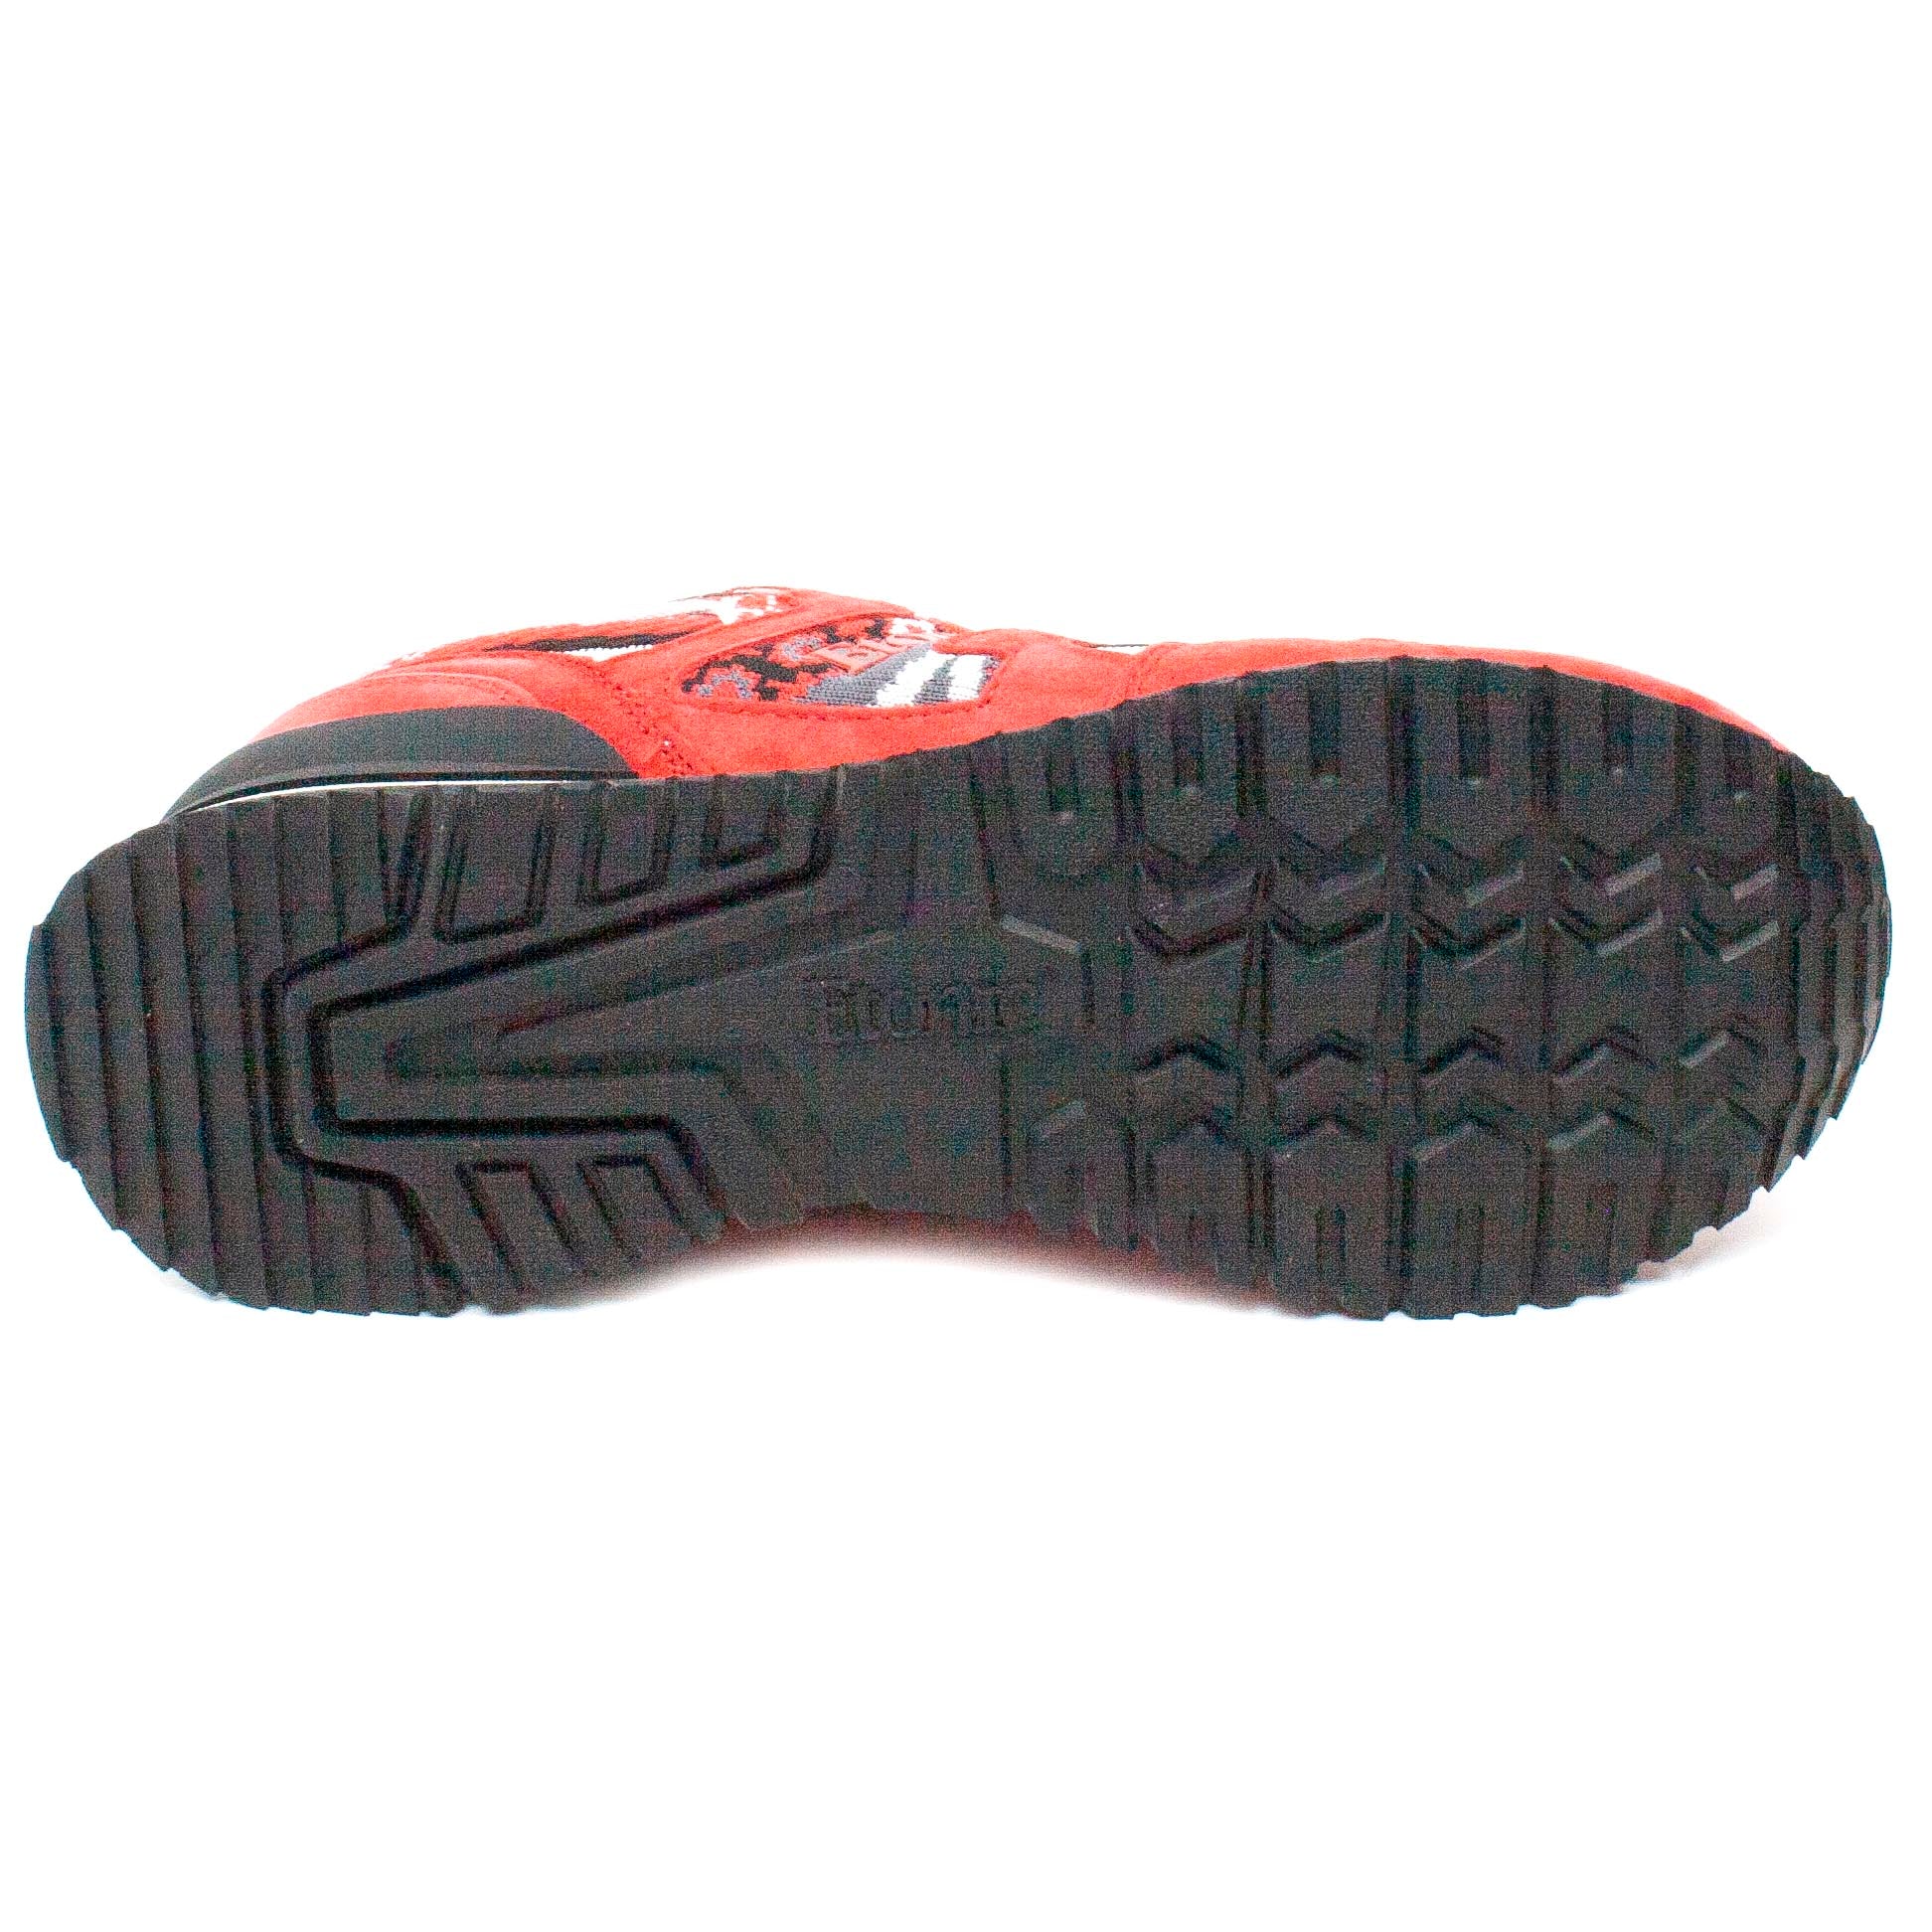 Etonic pantofi barbati sport E105120704 rosu IB2097-RS